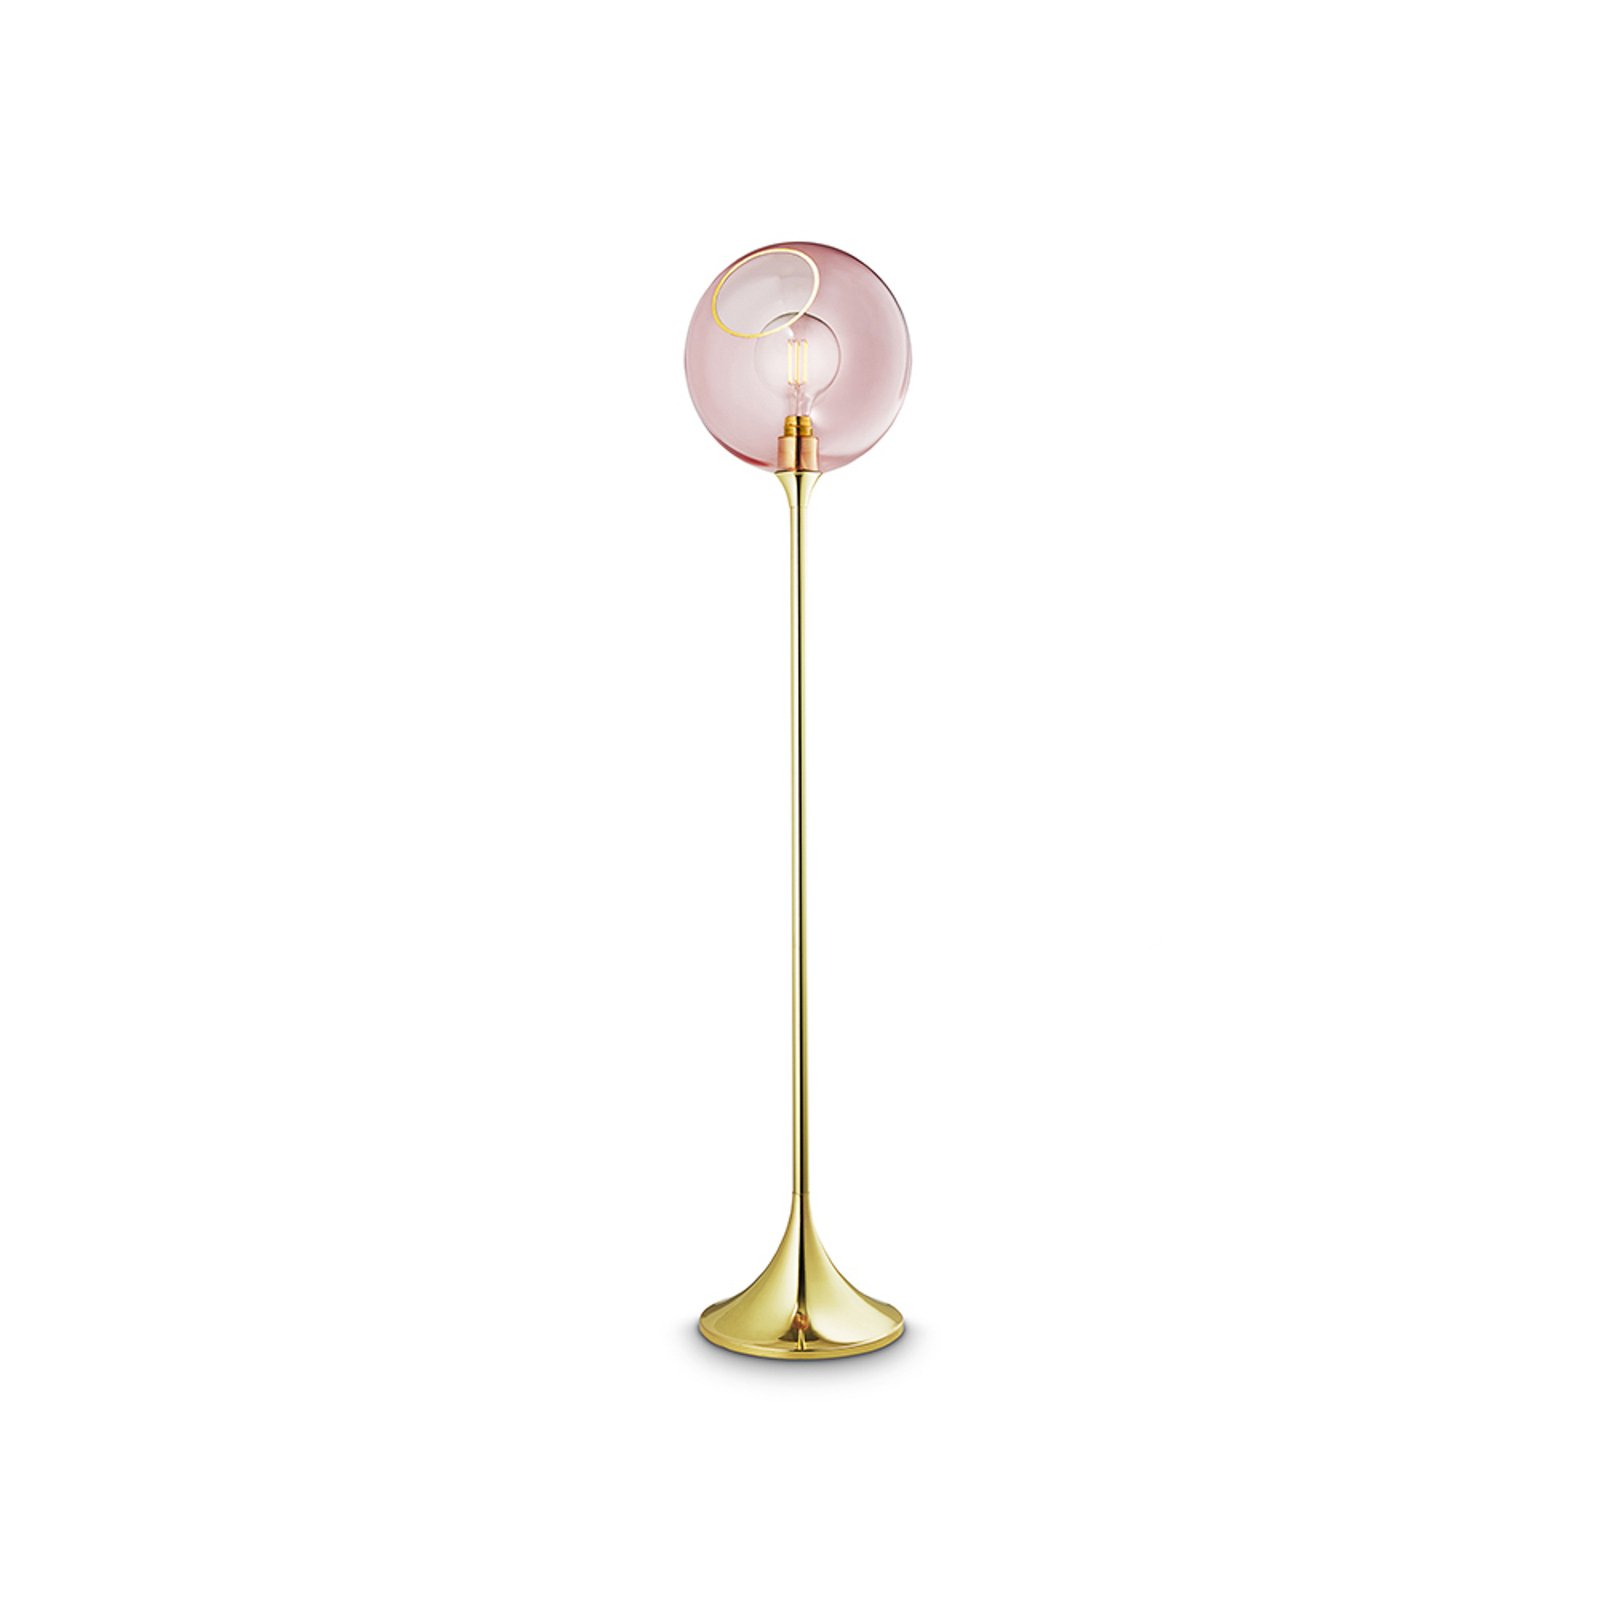 Ballroom floor lamp, pink, glass, hand-blown, dimmable